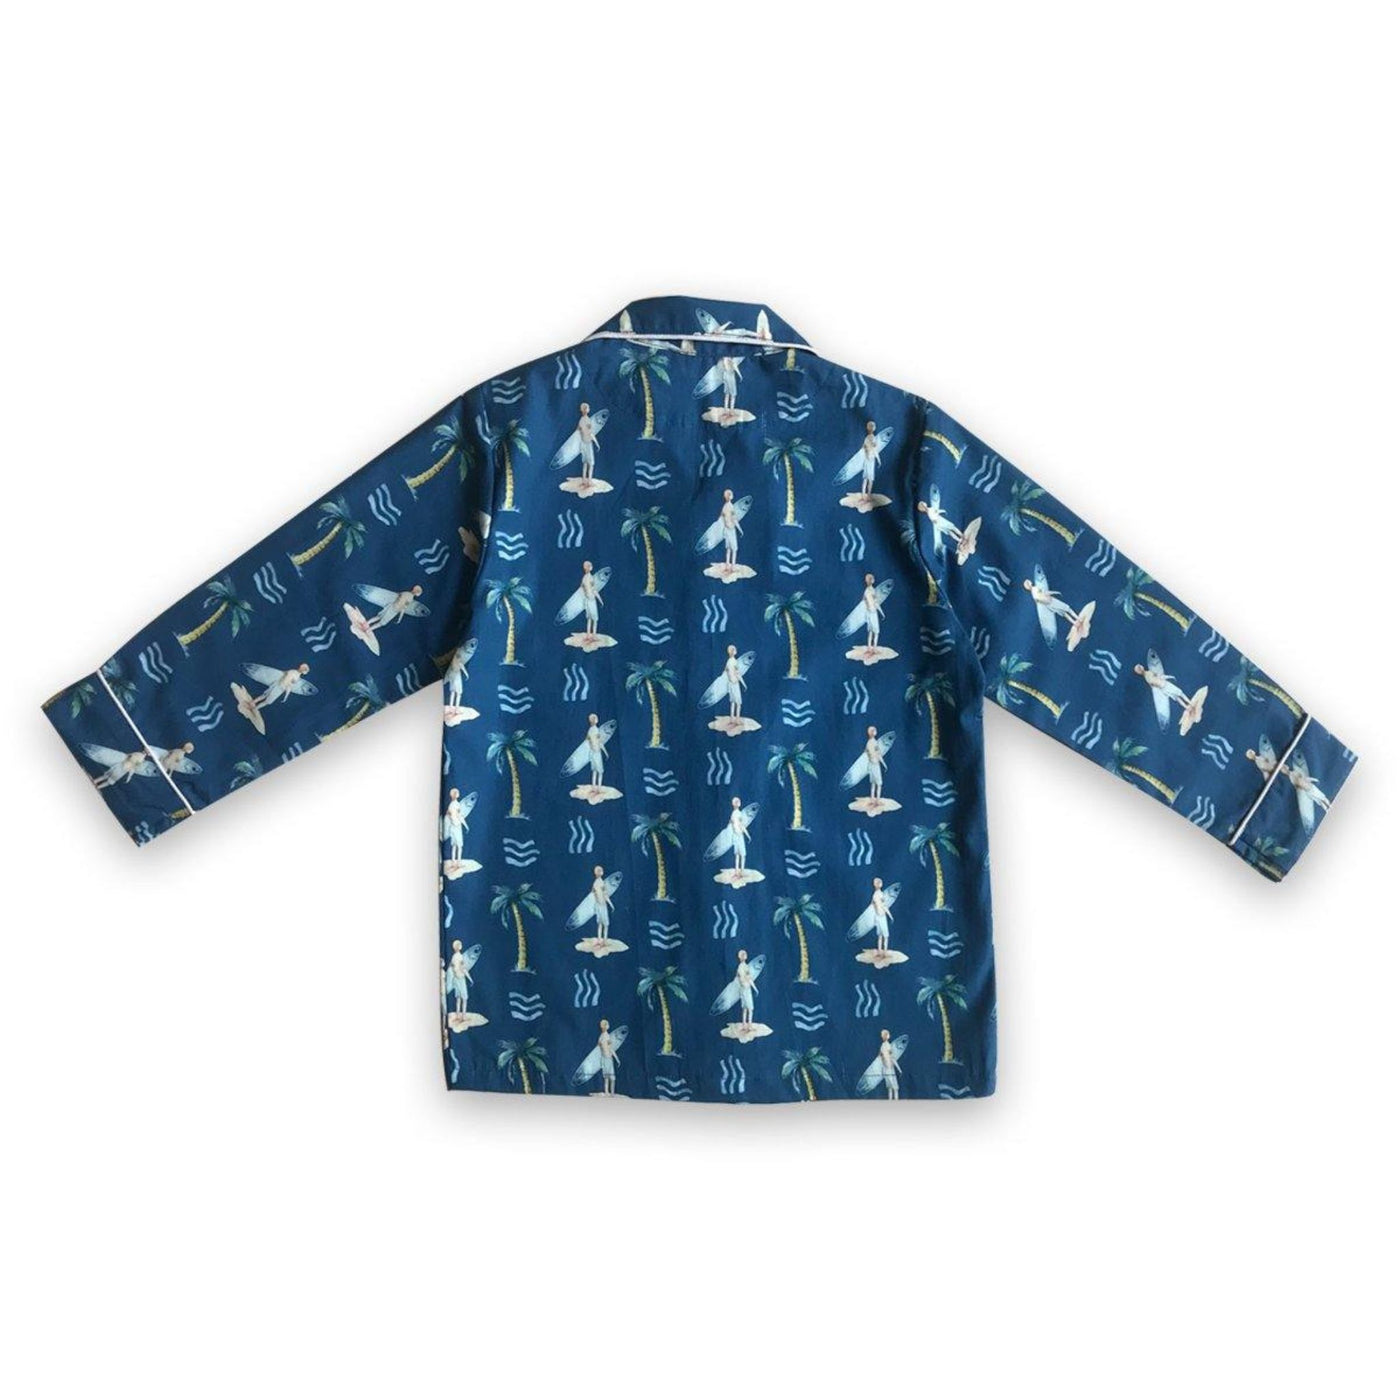 Pajama set in Surfer Paradise Joeycare 